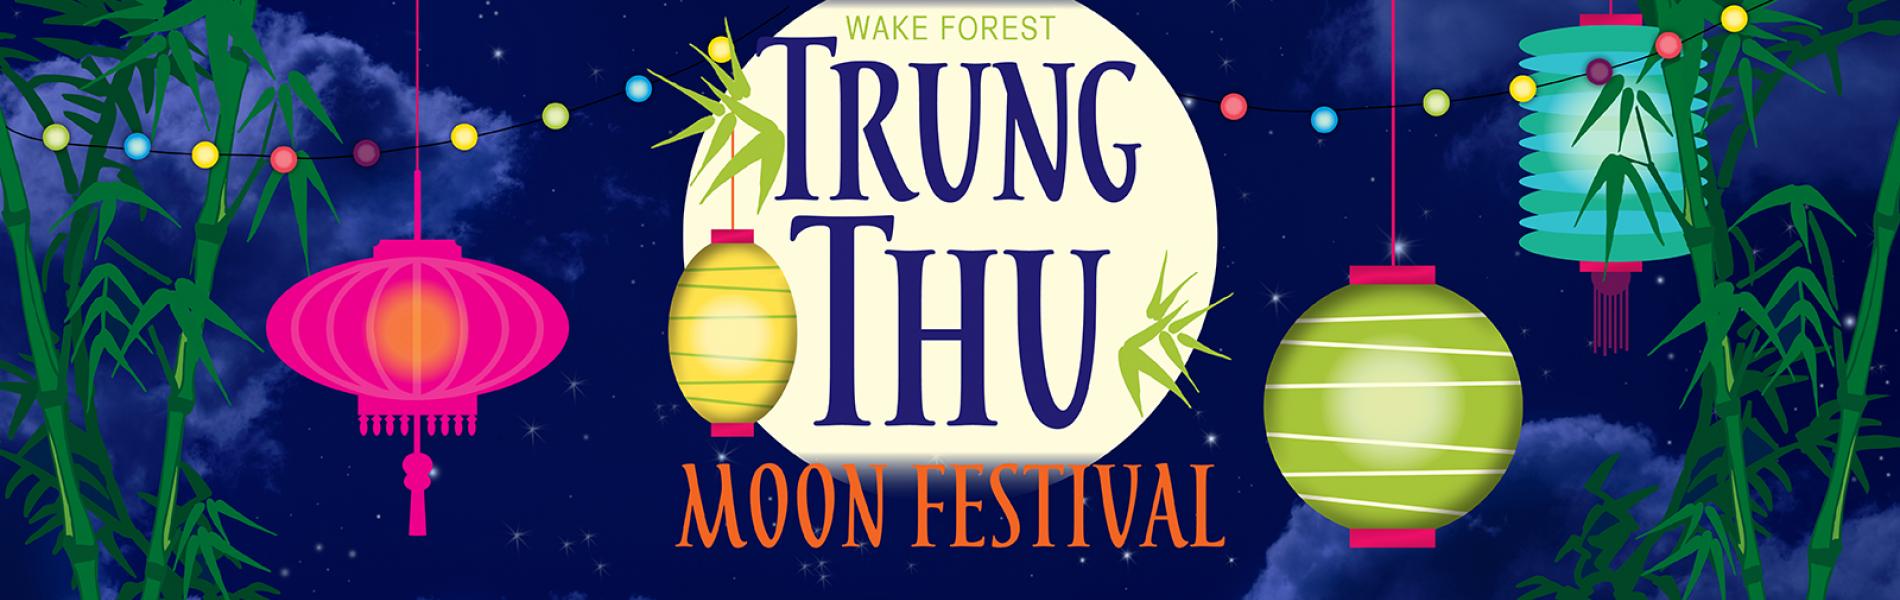 Trung Thu Moon Festival | Wake Forest Renaissance Centre